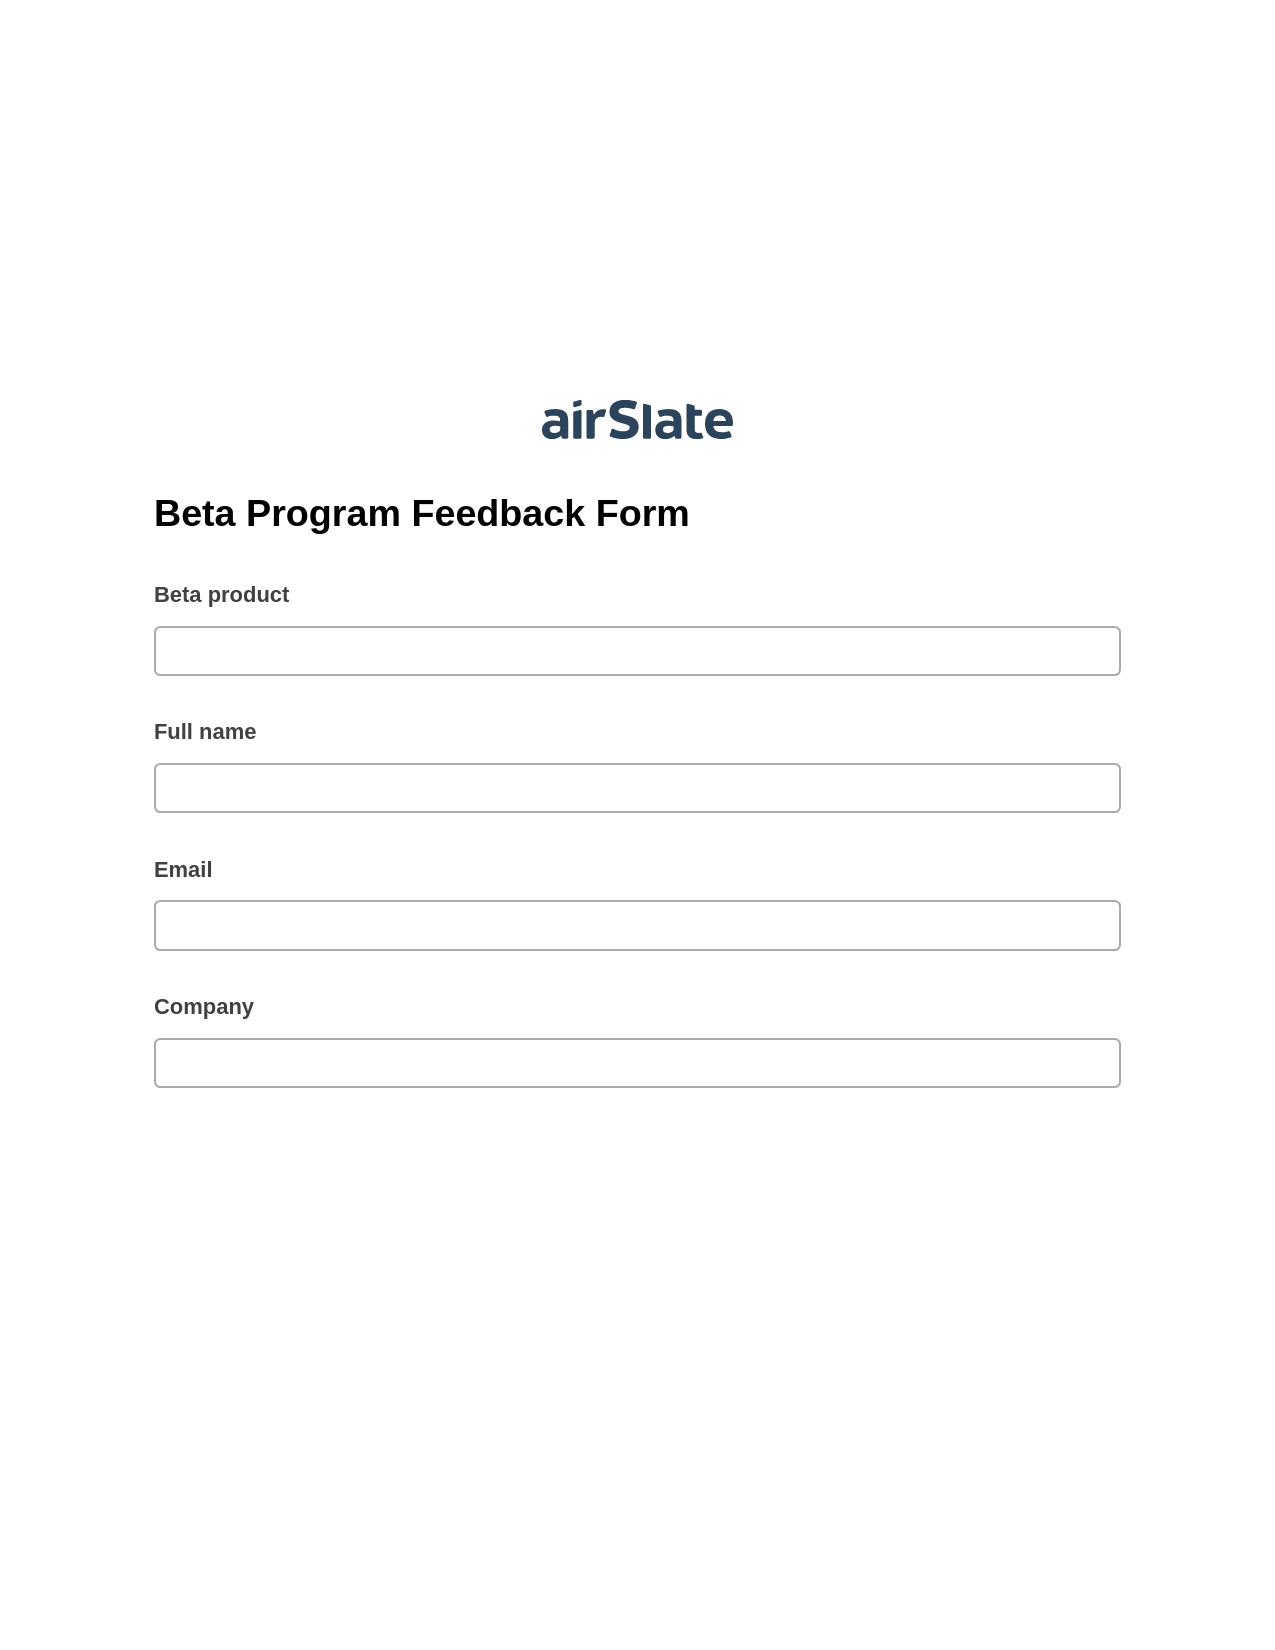 Beta Program Feedback Form Pre-fill from Salesforce Record Bot, Pre-fill with Custom Data Bot, Webhook Postfinish Bot